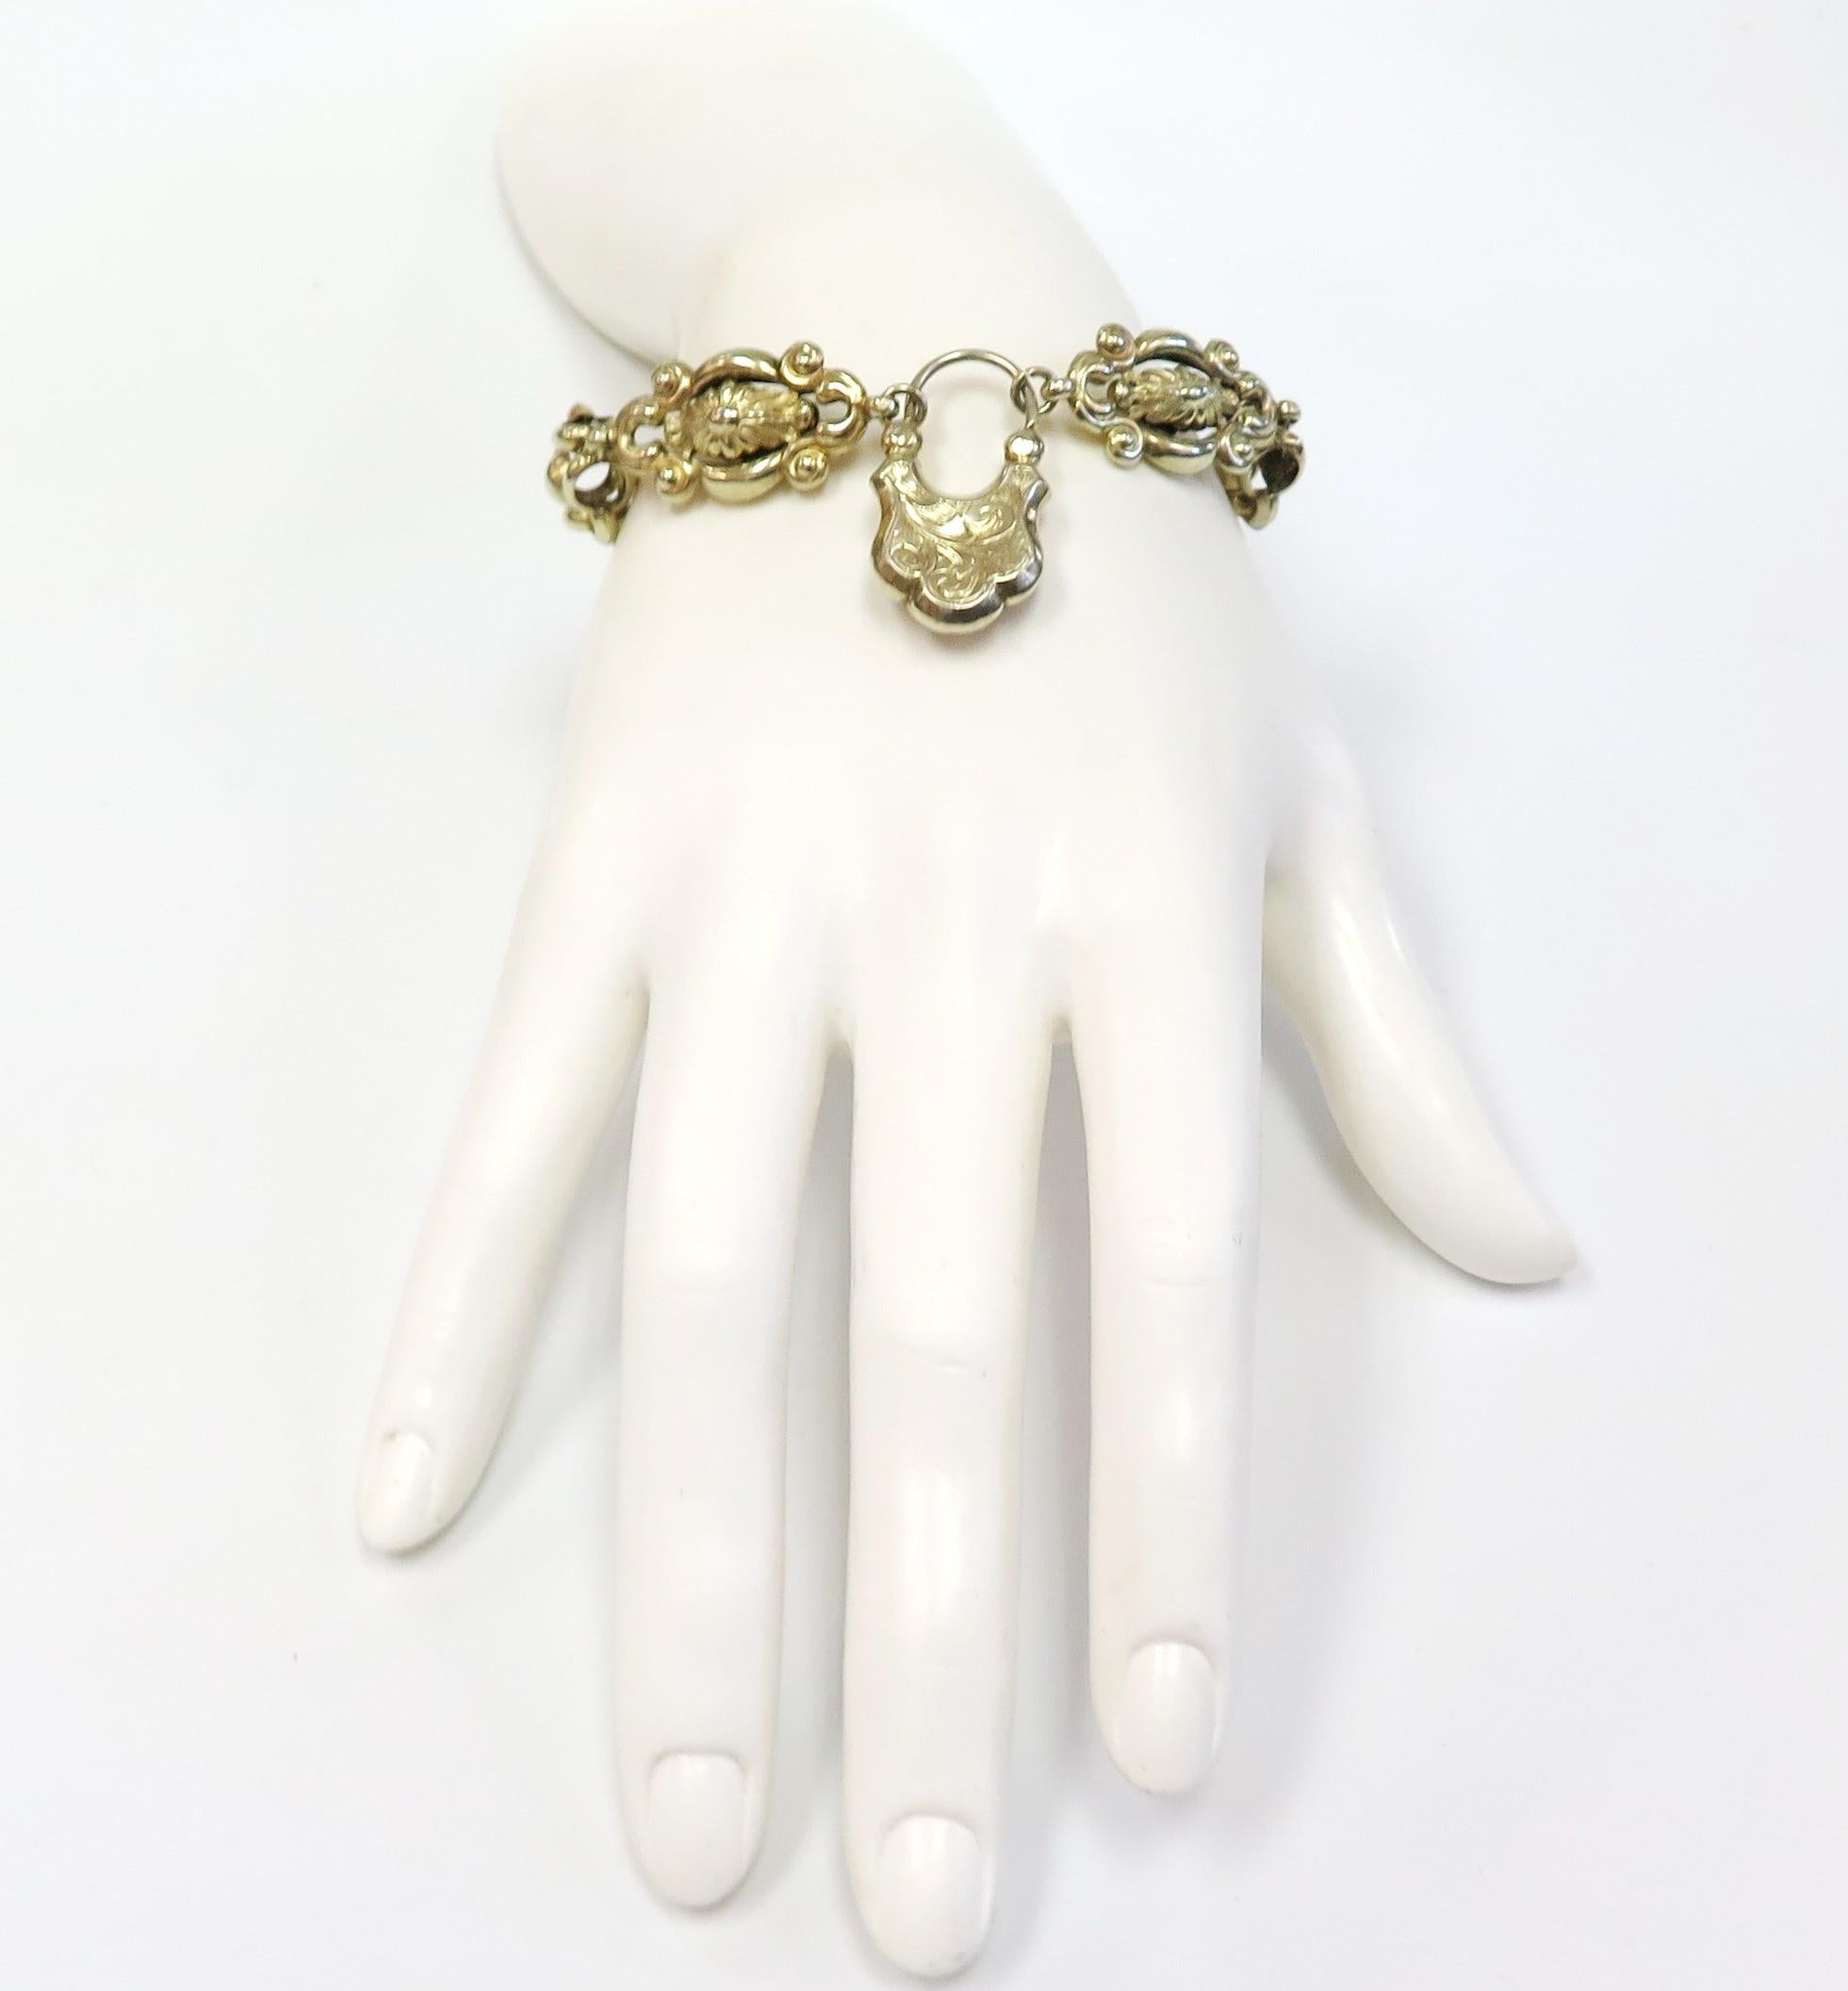 Antique Victorian Mourning Bracelet with Etched Padlock Clasp, 10 Karat For Sale 2